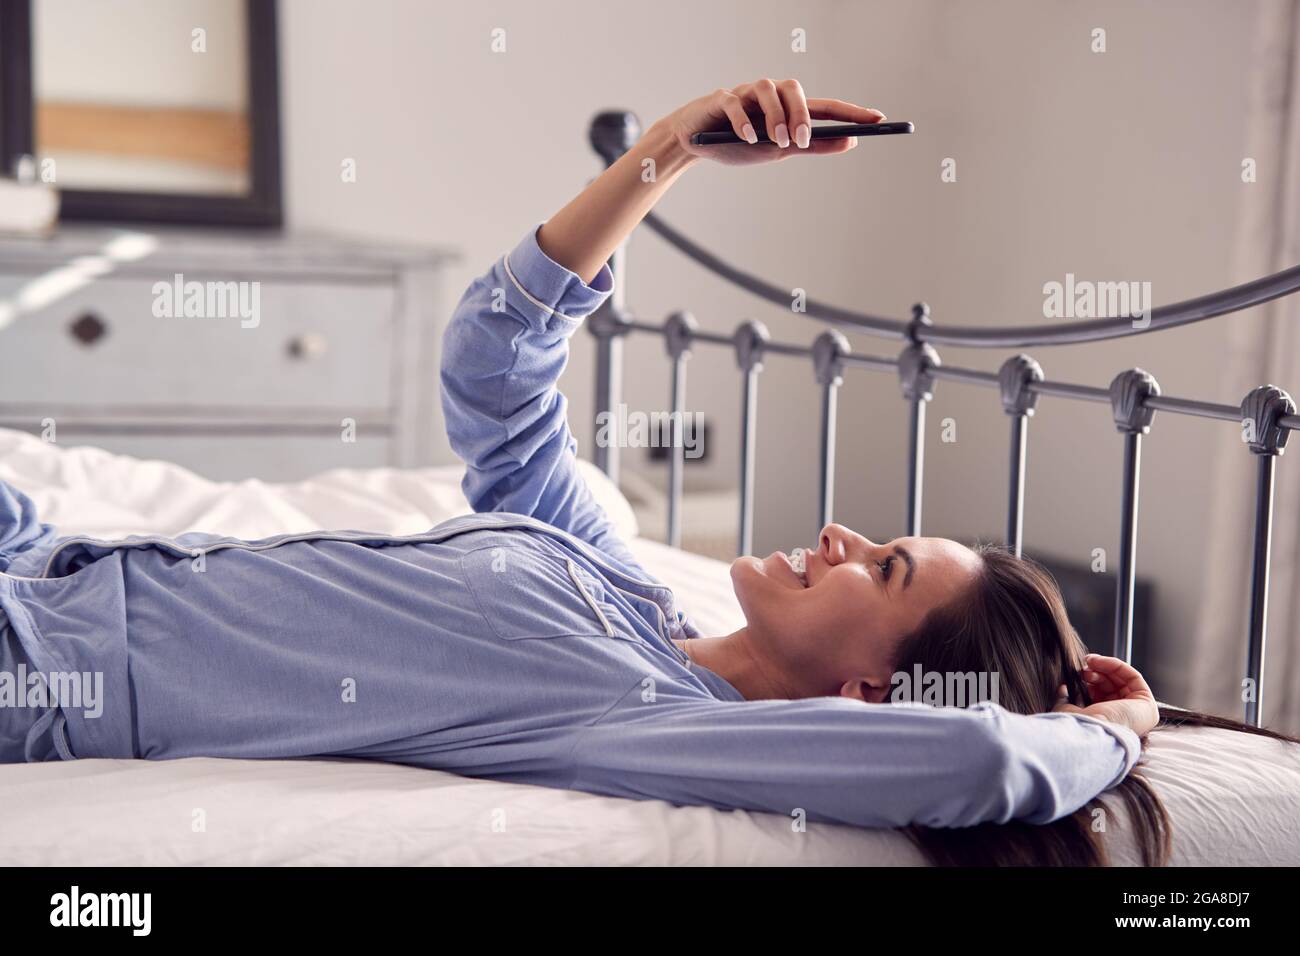 Woman Wearing Pyjamas Taking Selfie On Mobile Phone Lying On Bed Stock  Photo - Alamy